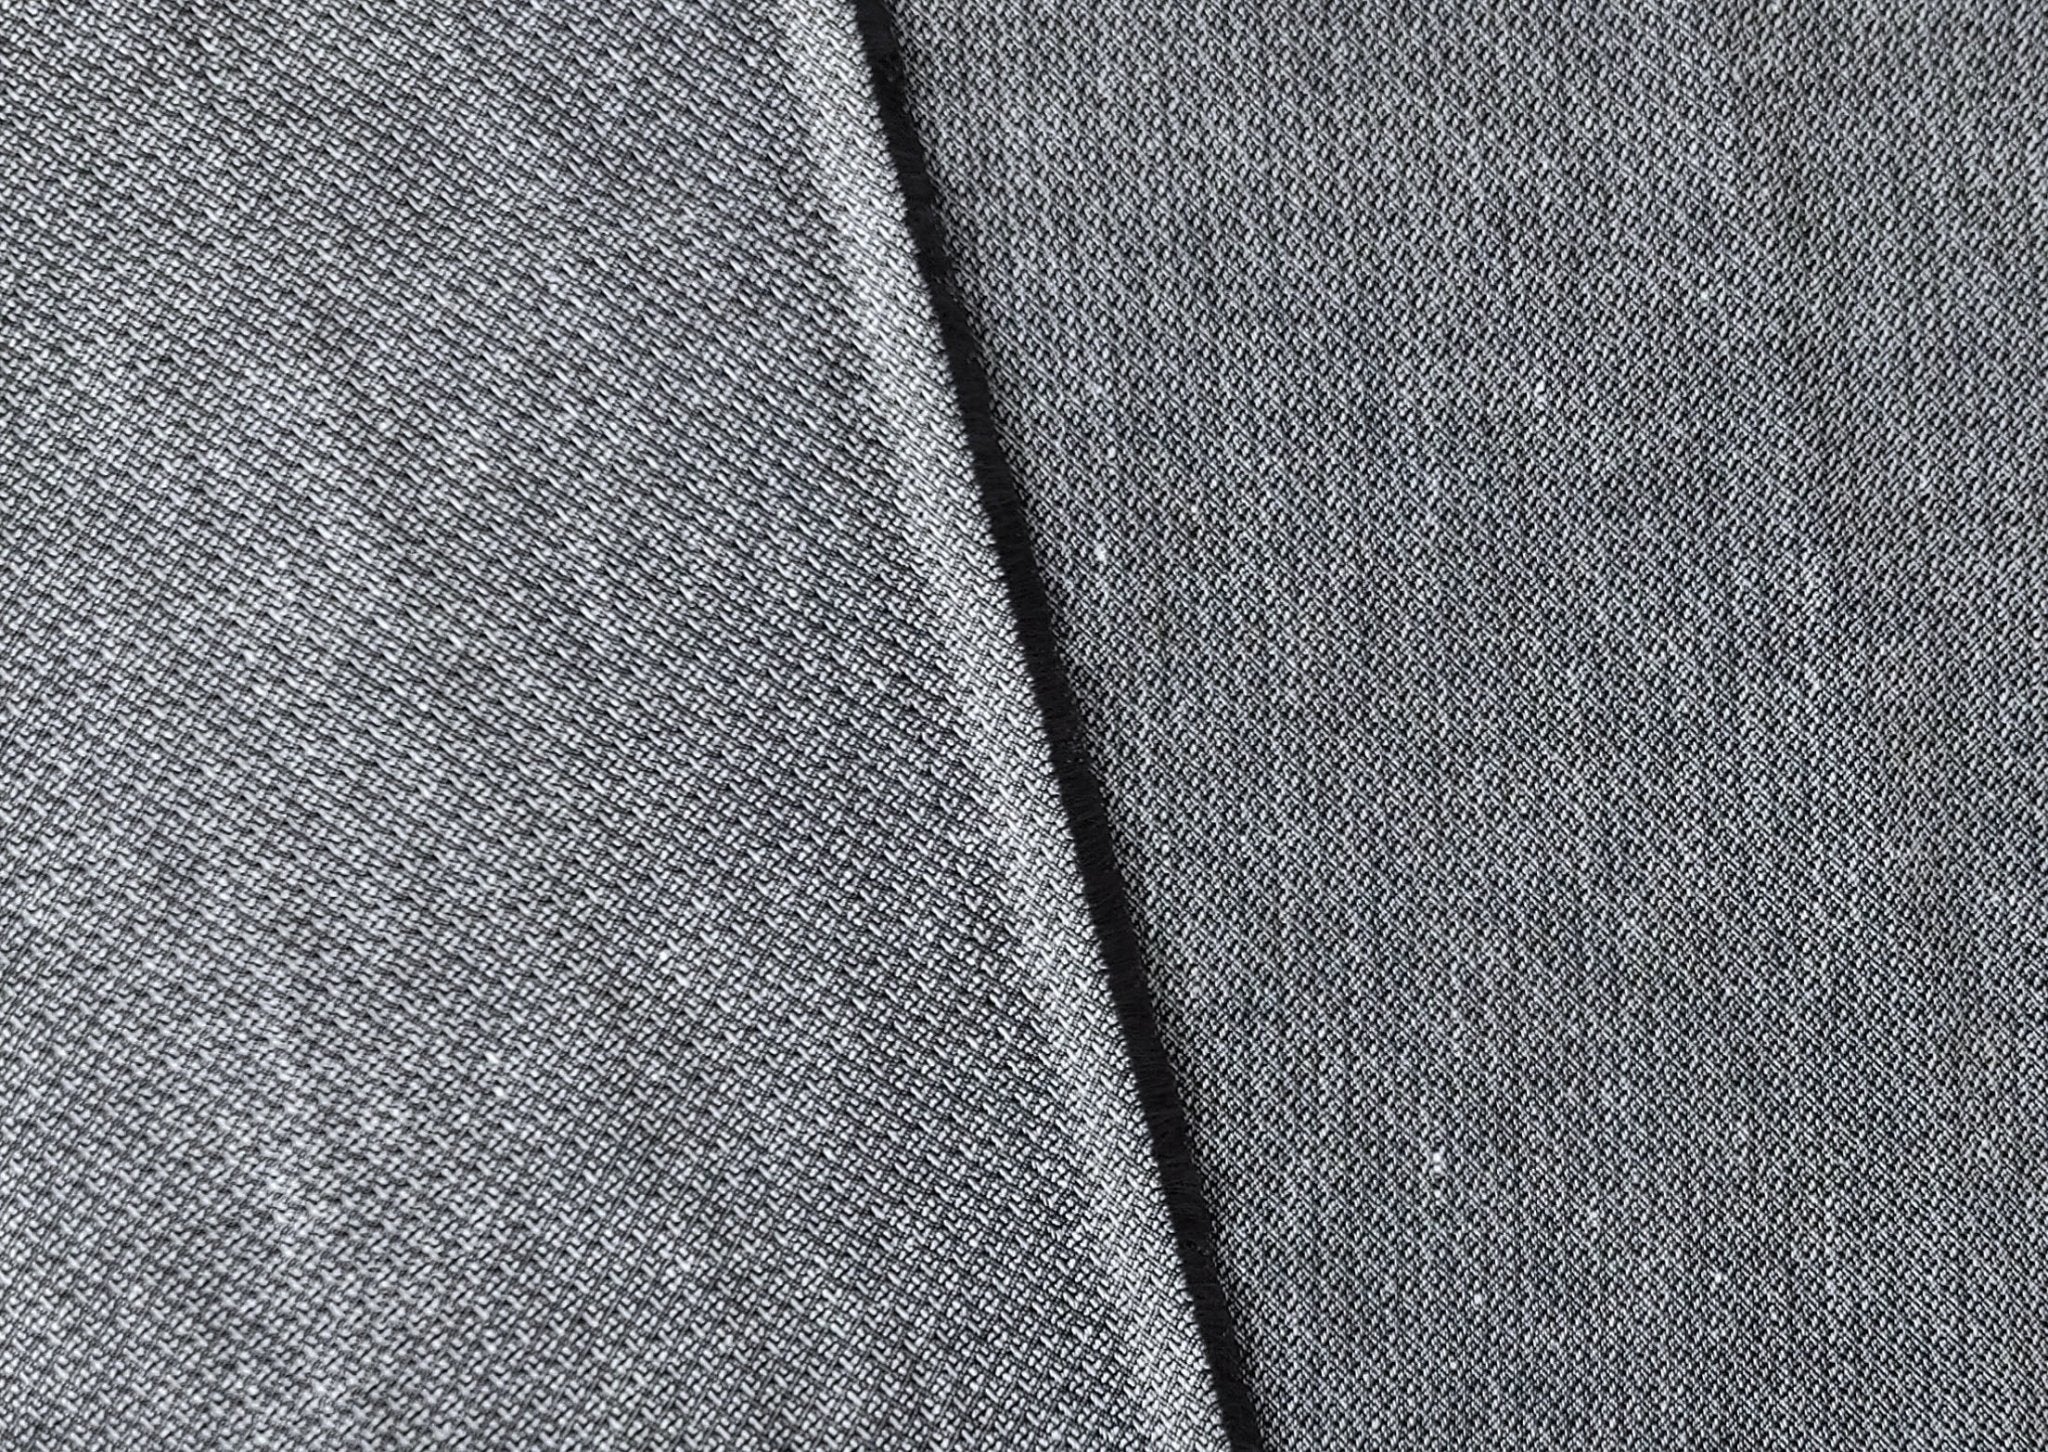 Monochrome Elegance: Linen Cotton Dobby Fabric 3946 - The Linen Lab - Gray